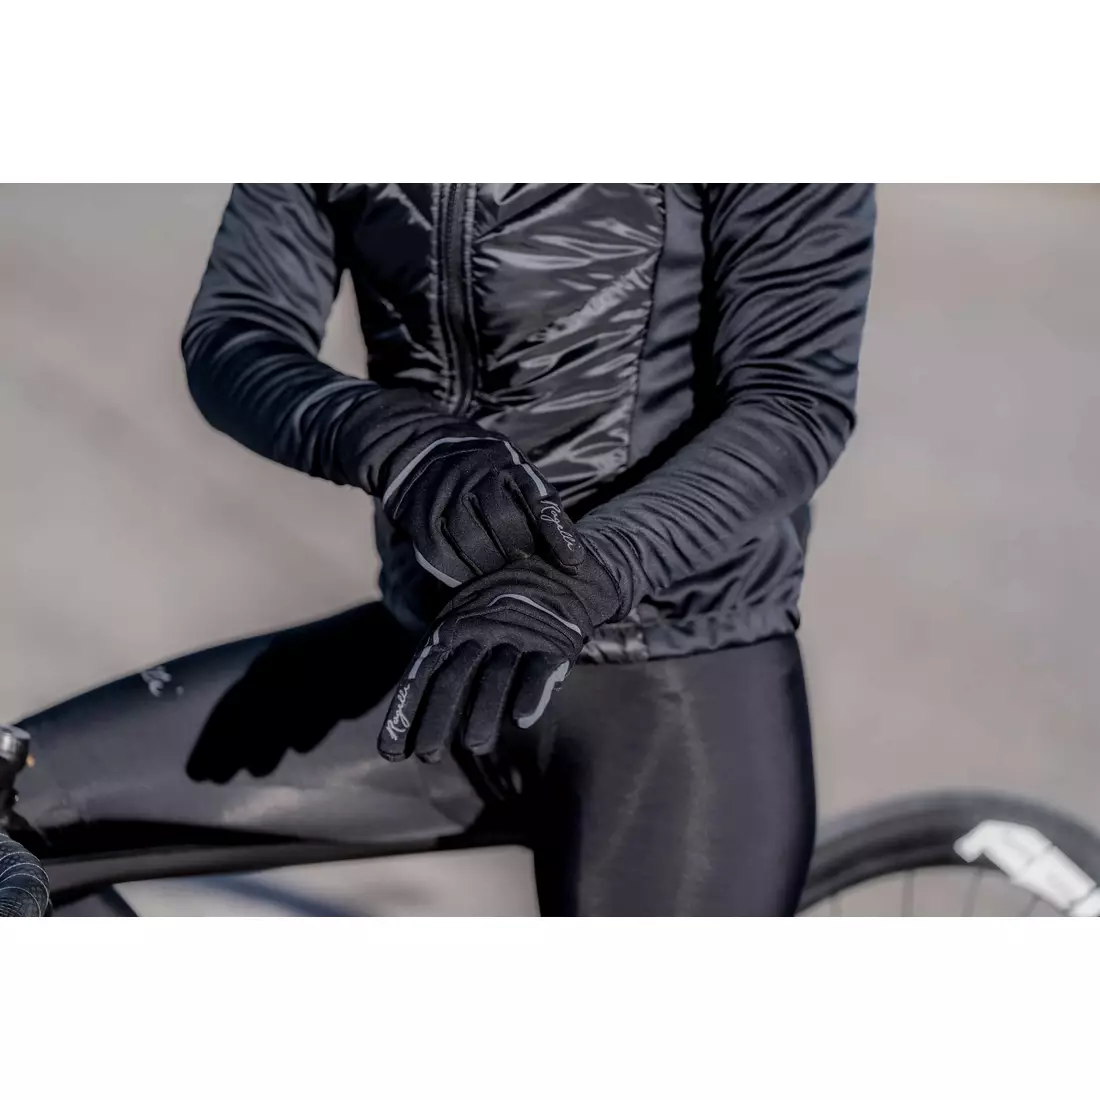 Rogelli APEX women's winter cycling gloves, black